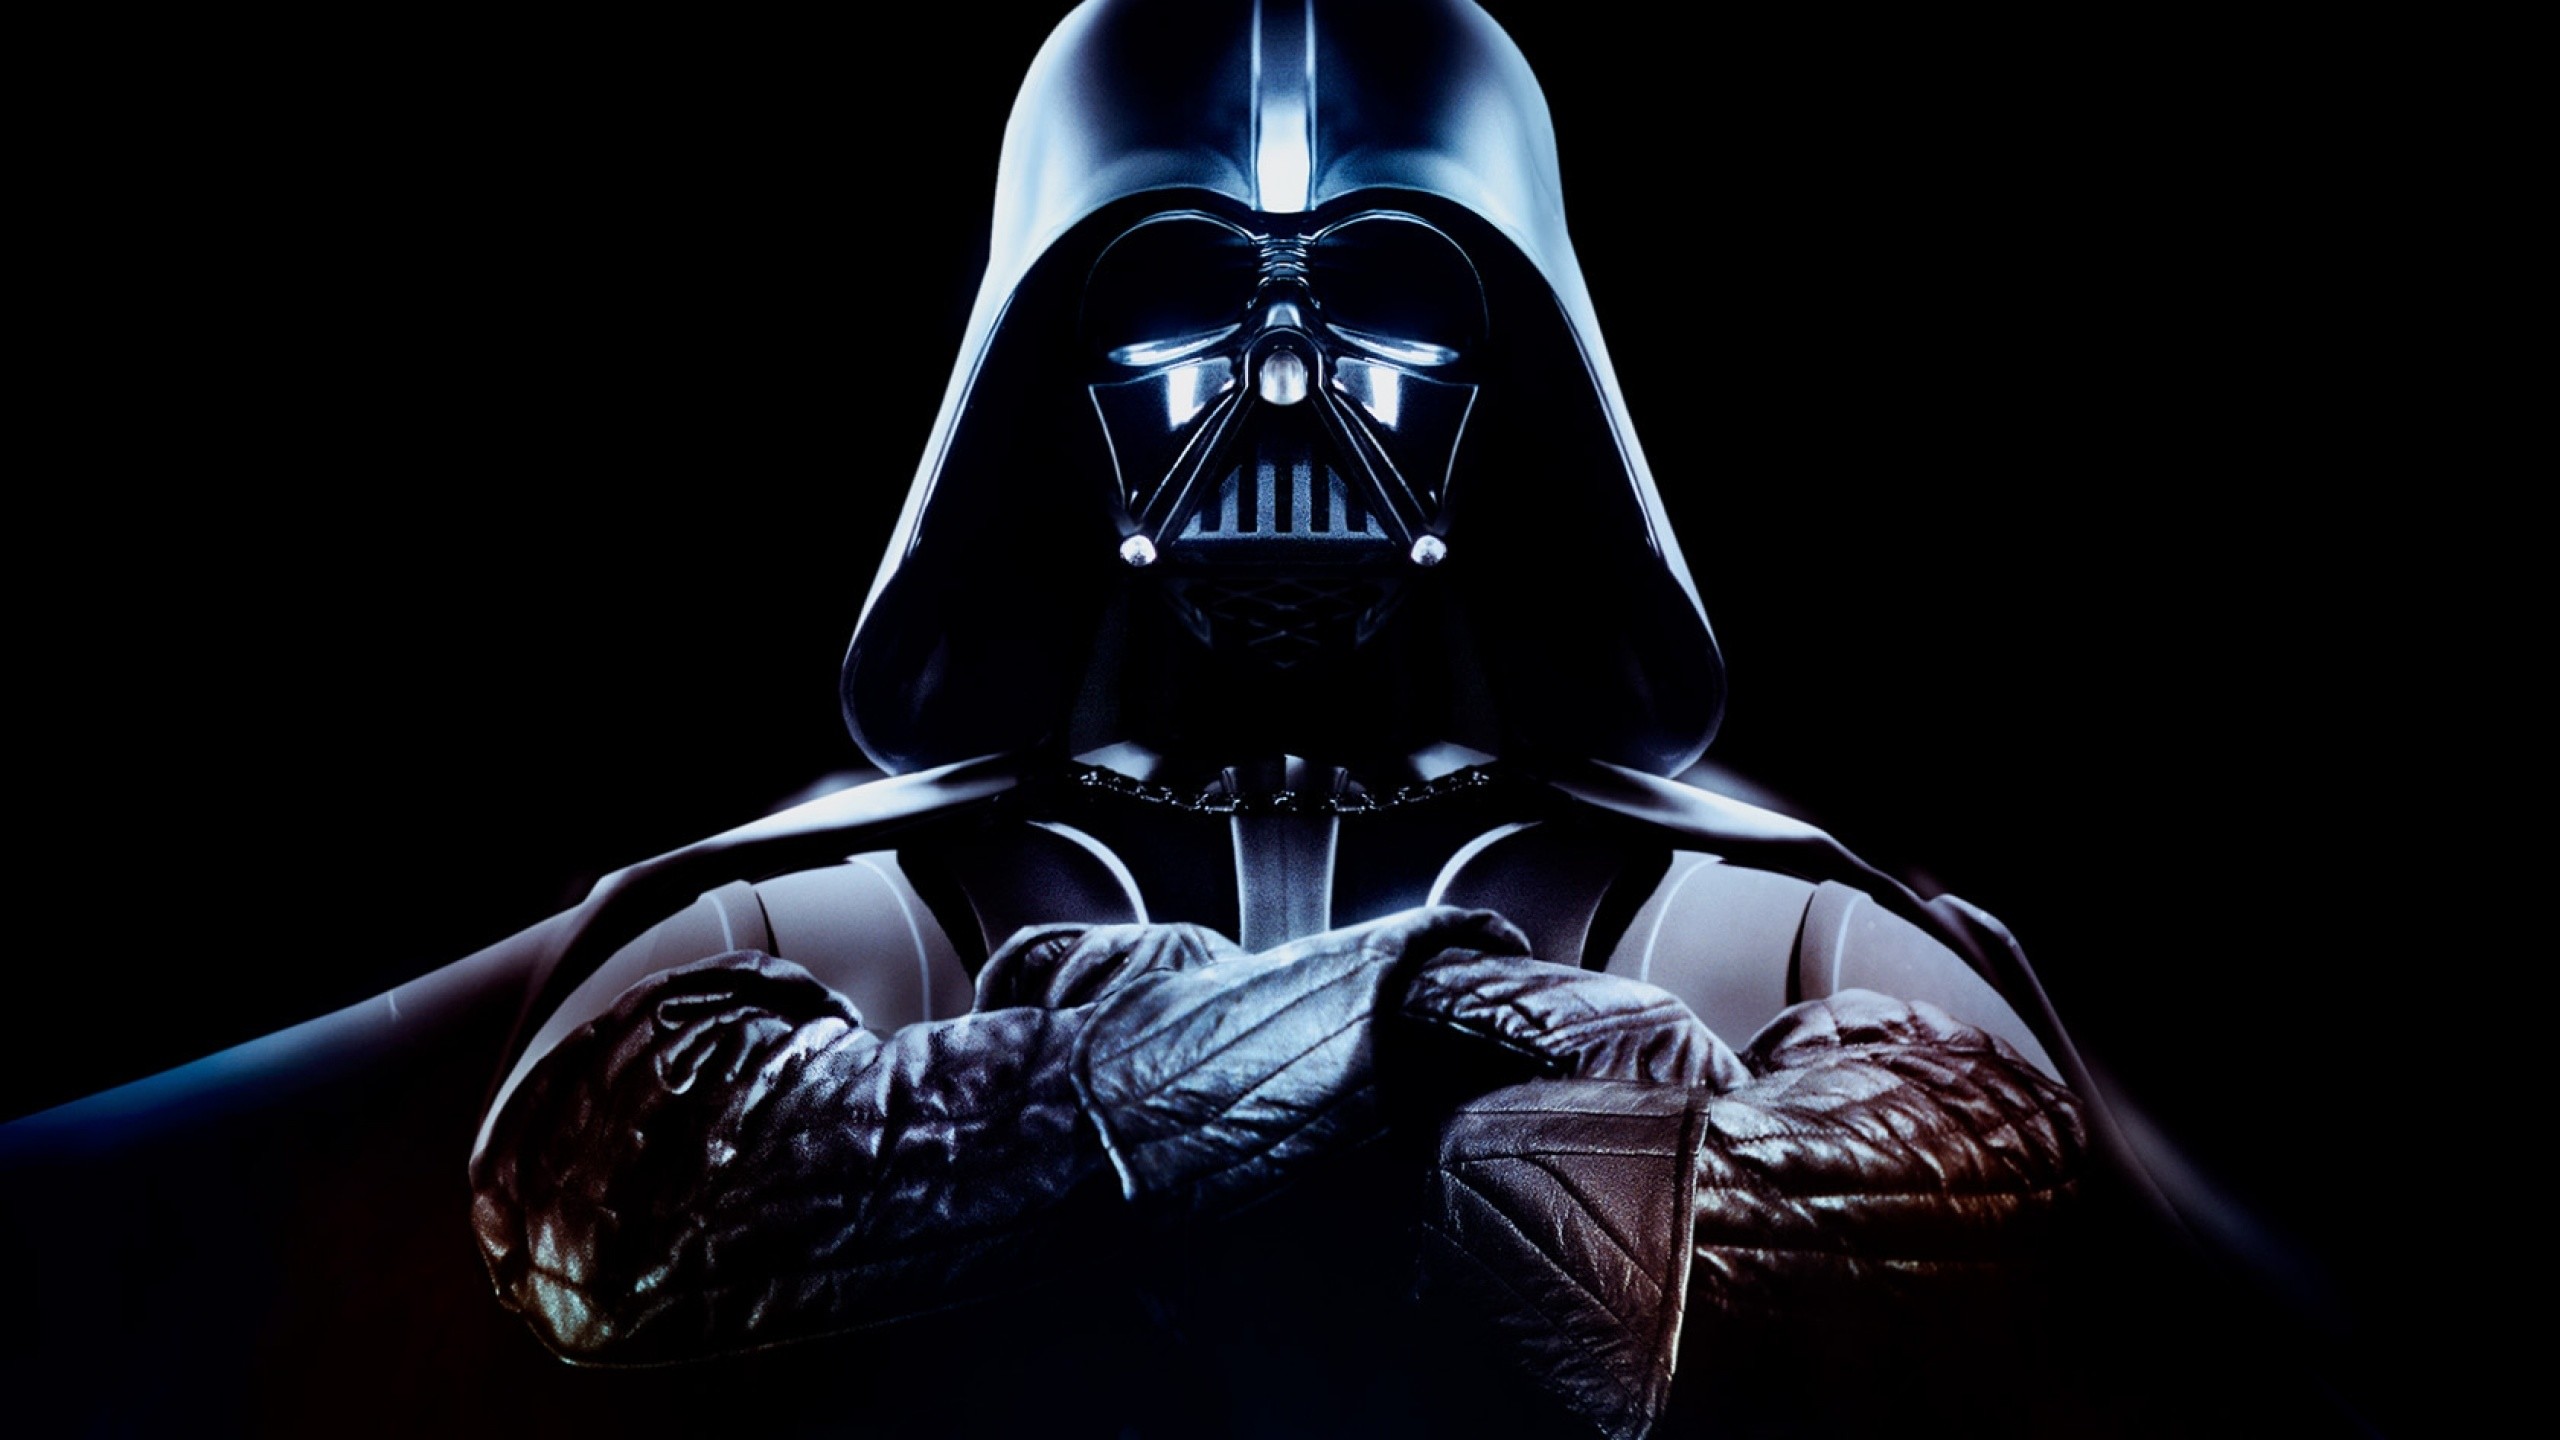 2560x1440 Star-Wars-Starwars-Darth-Vader-Lord-Vader-Darth-